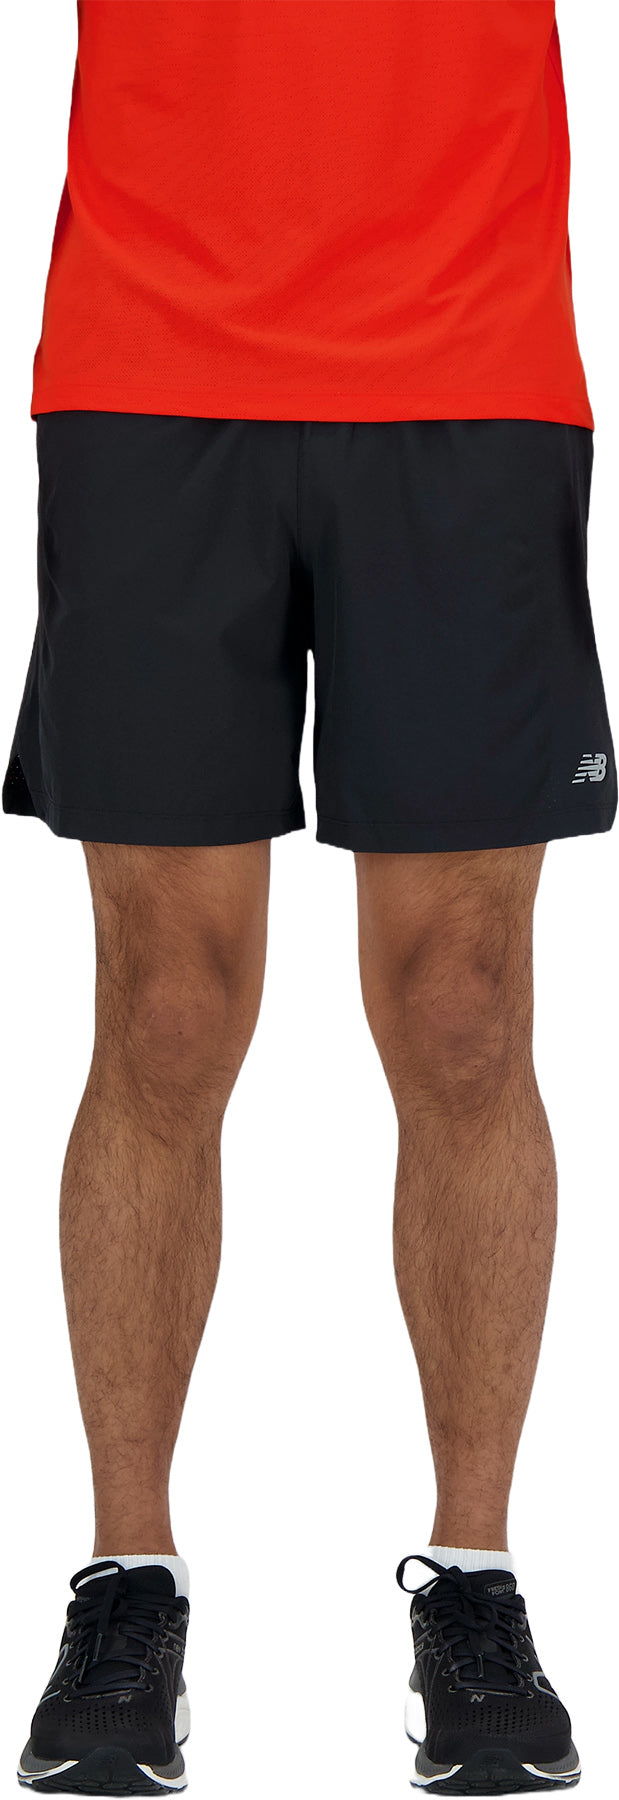 Rab Talus Active Shorts - Men's